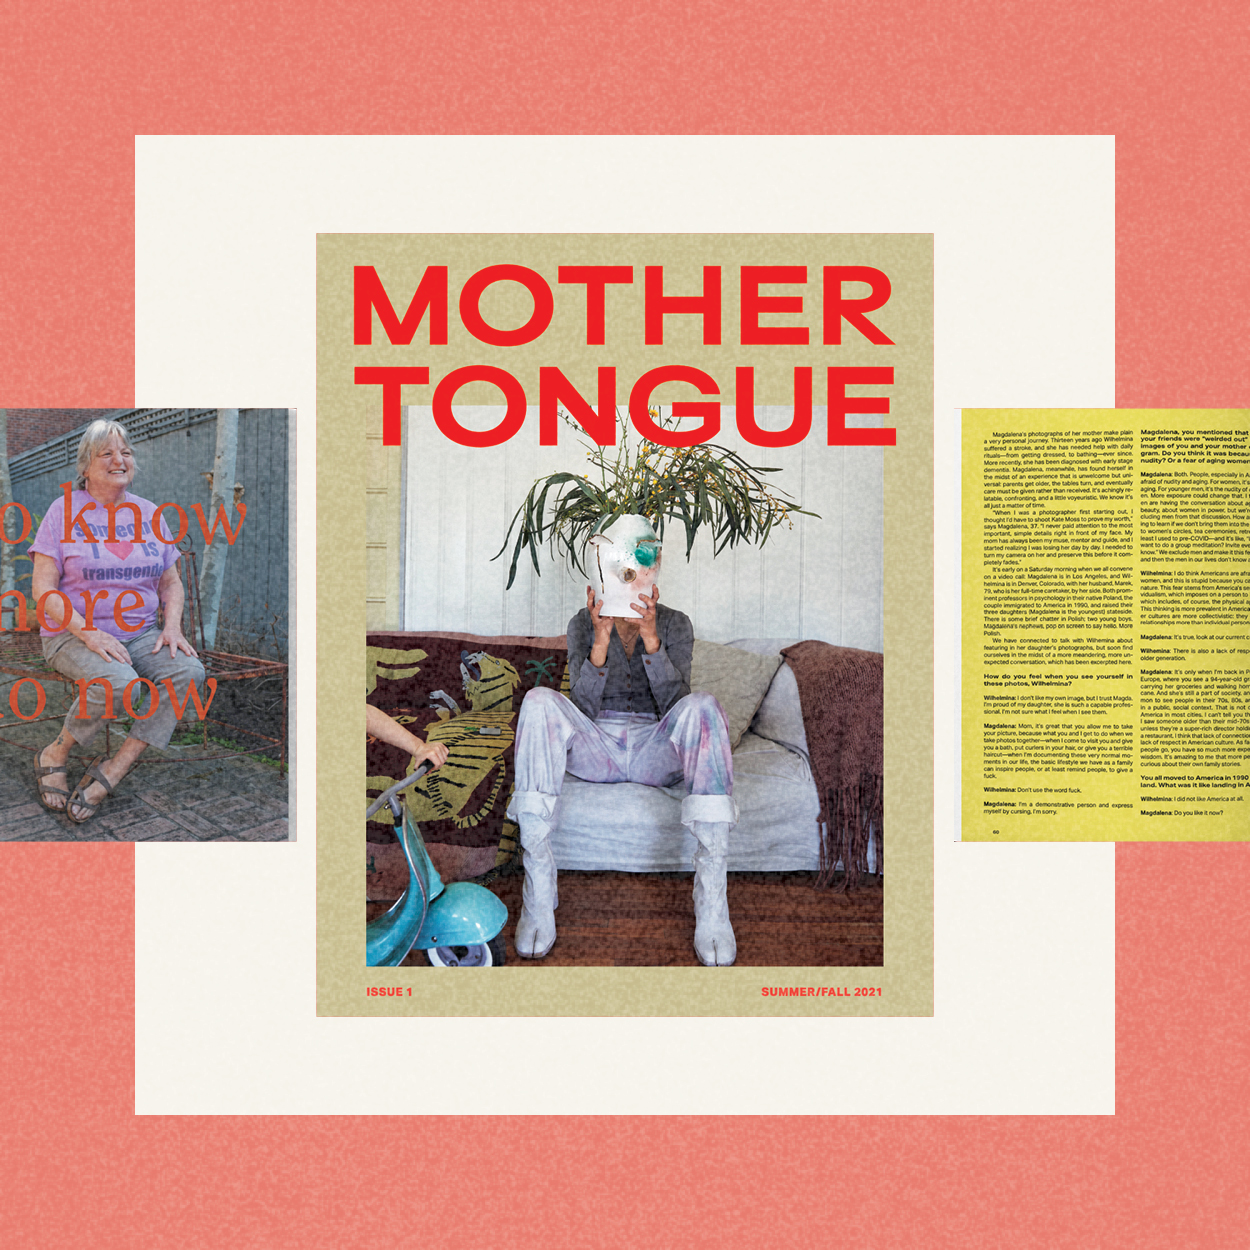 designed asset, mother tongue magazine, coral background